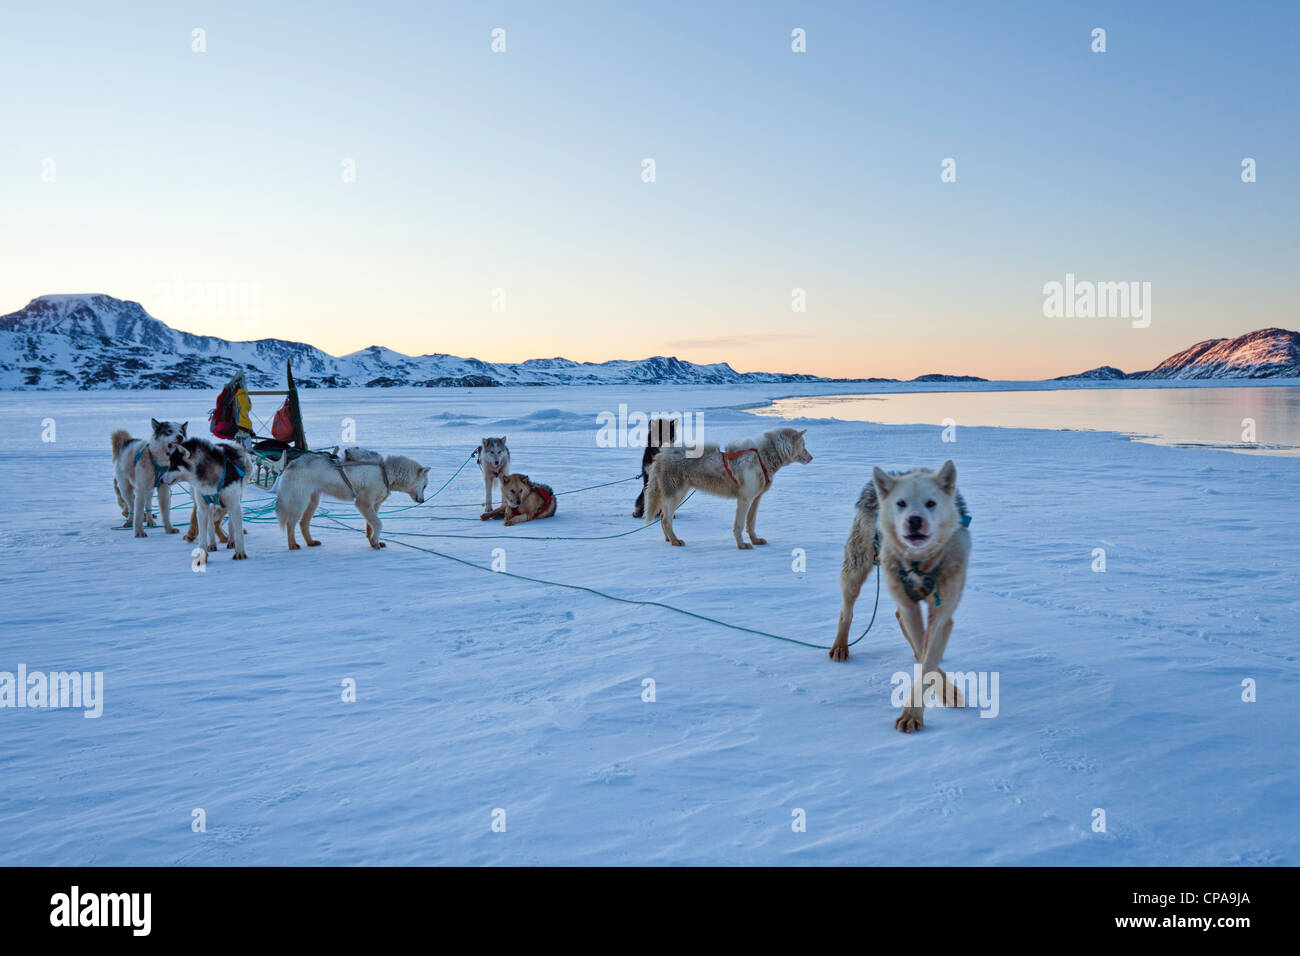 L'équipe de chiens huskies / Husky - Groenland Banque D'Images